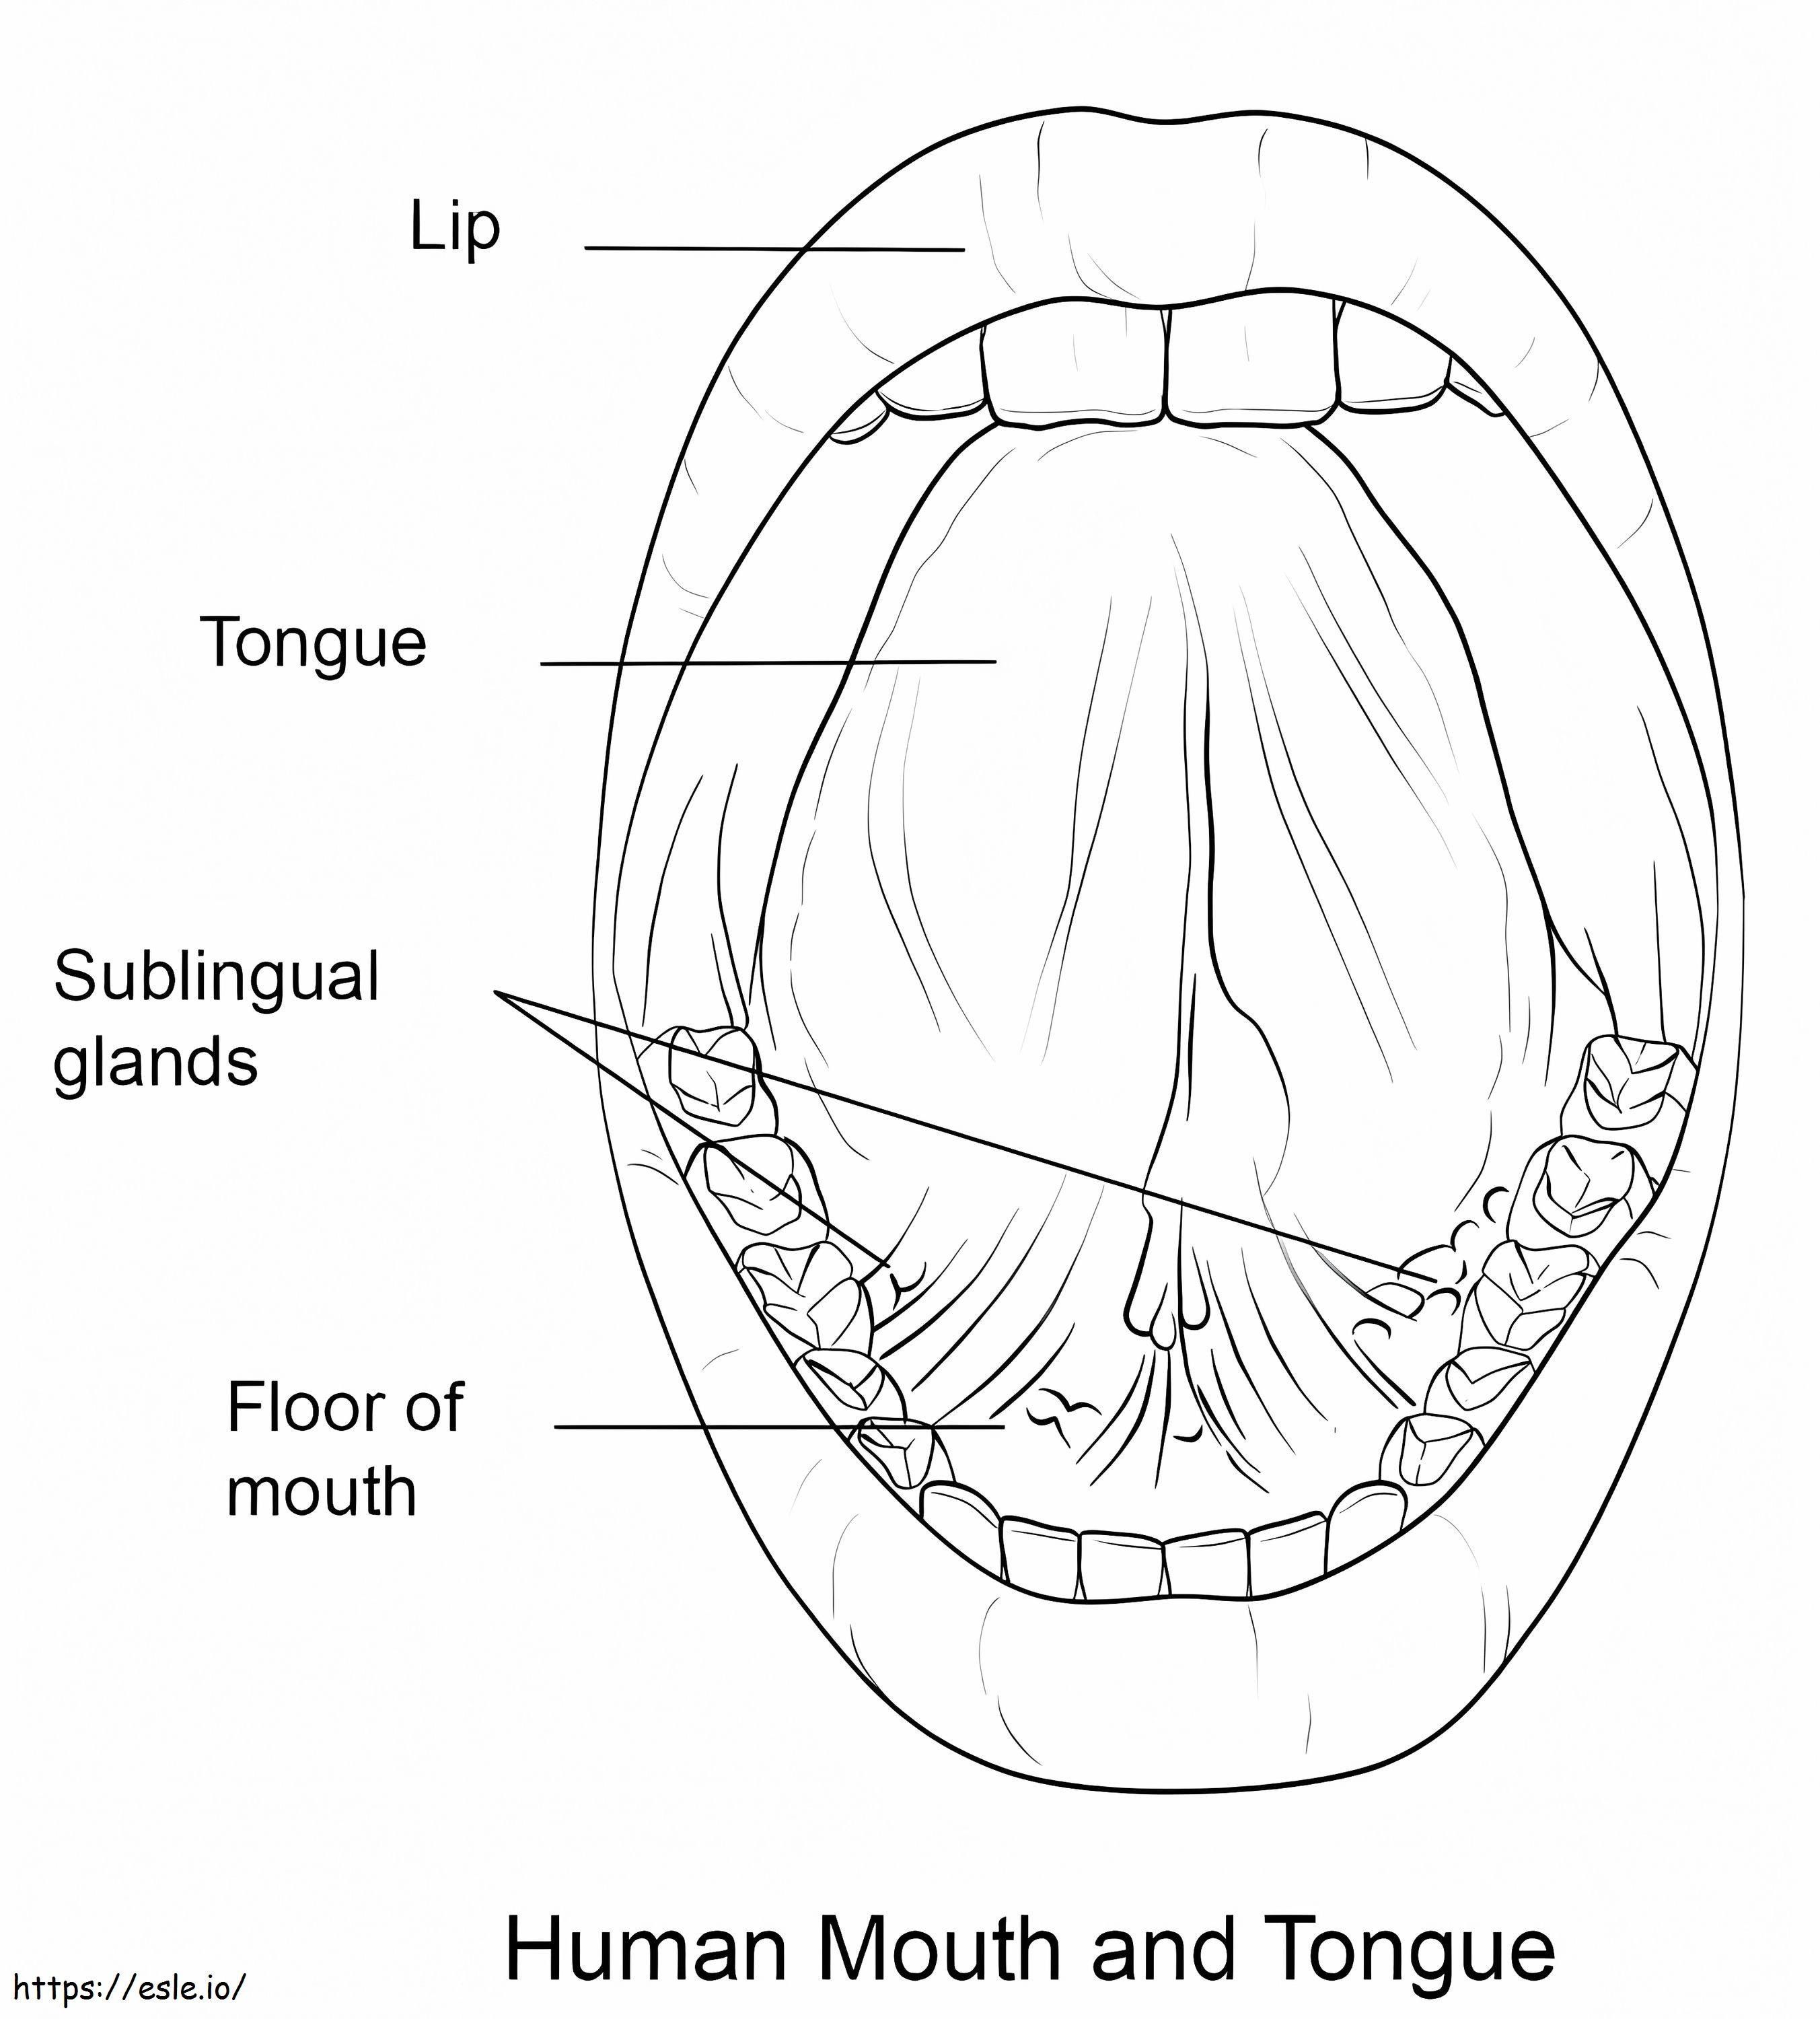 Human Mouth And Tongue coloring page